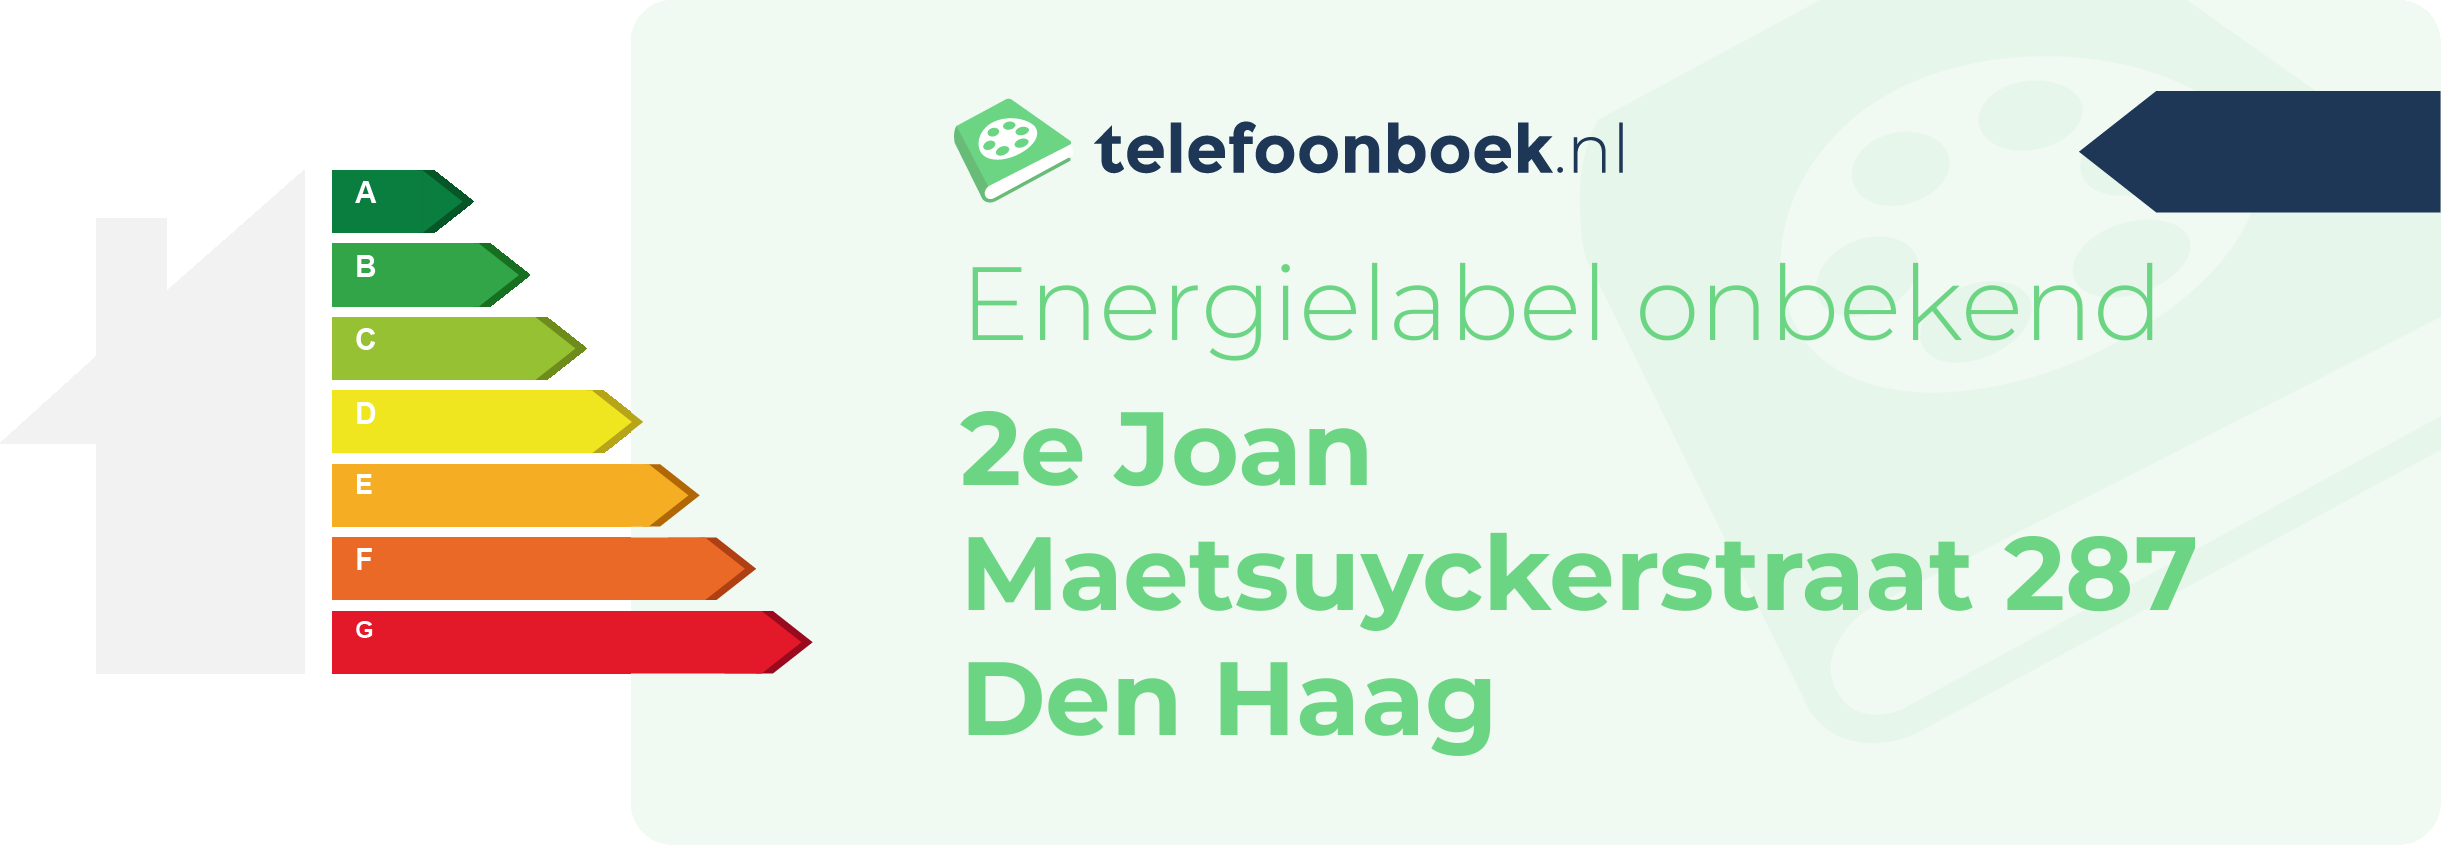 Energielabel 2e Joan Maetsuyckerstraat 287 Den Haag